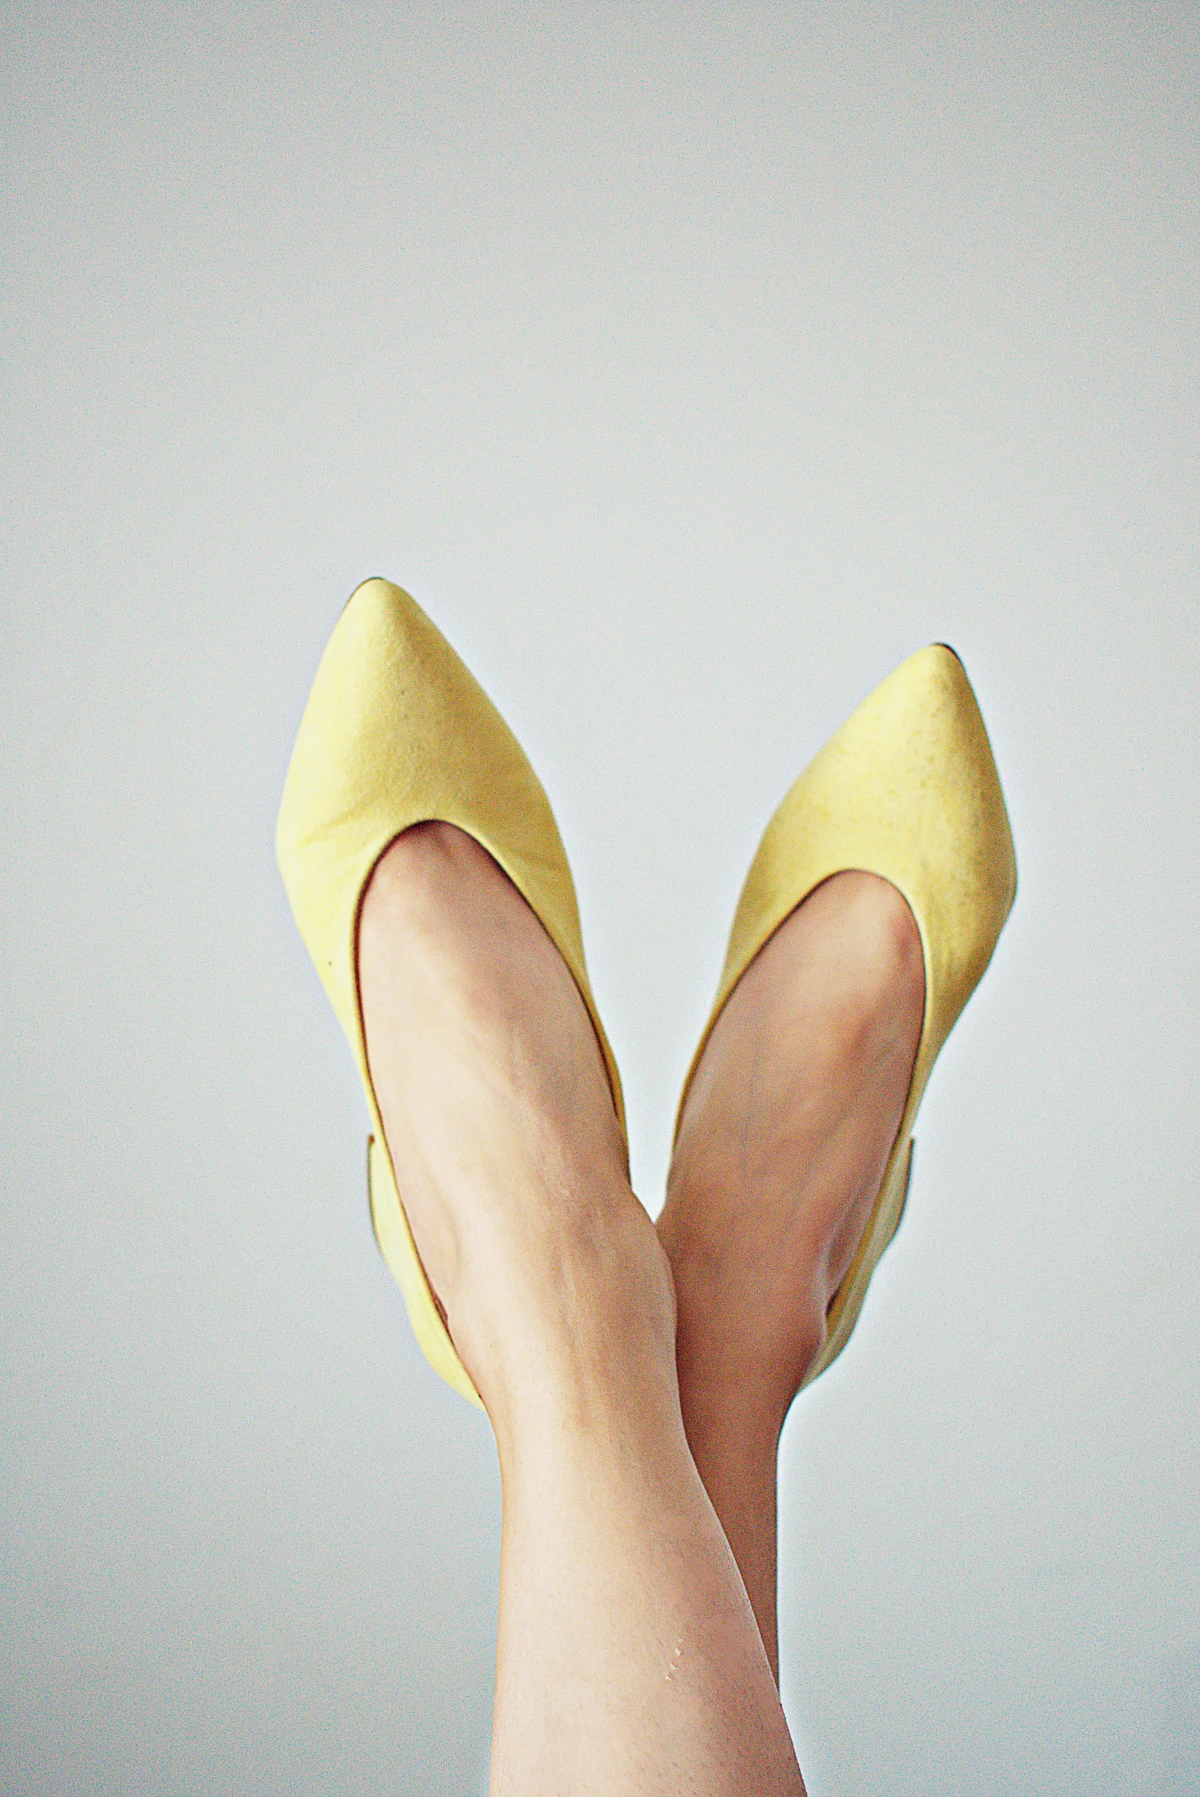 chaussures femmes jaunes etude